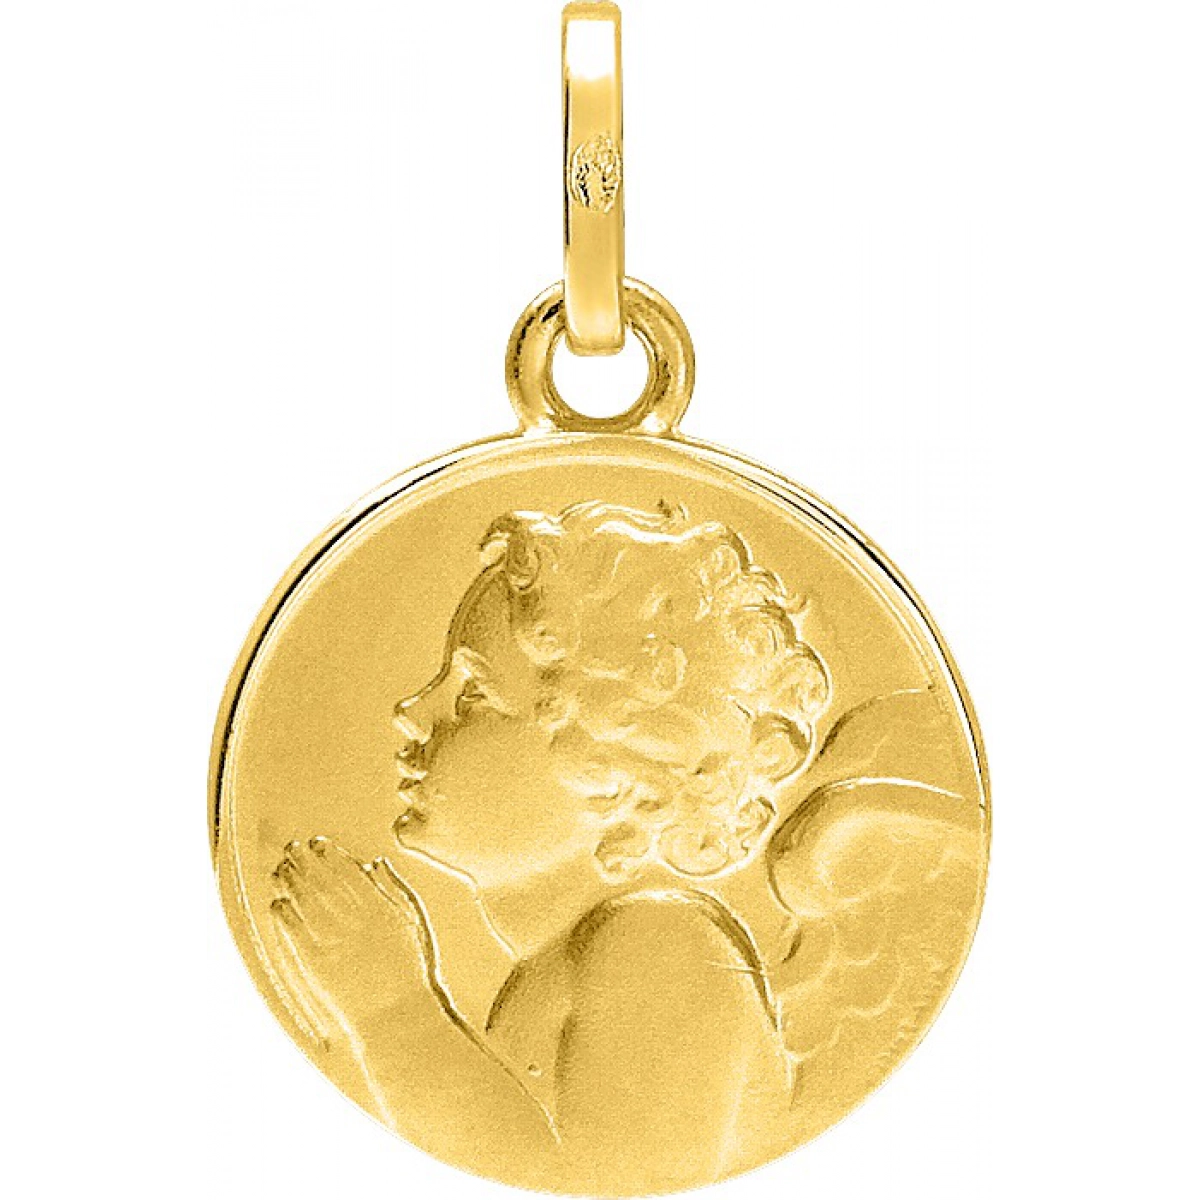 Medaille ange or750j  Lua Blanca  20858.0